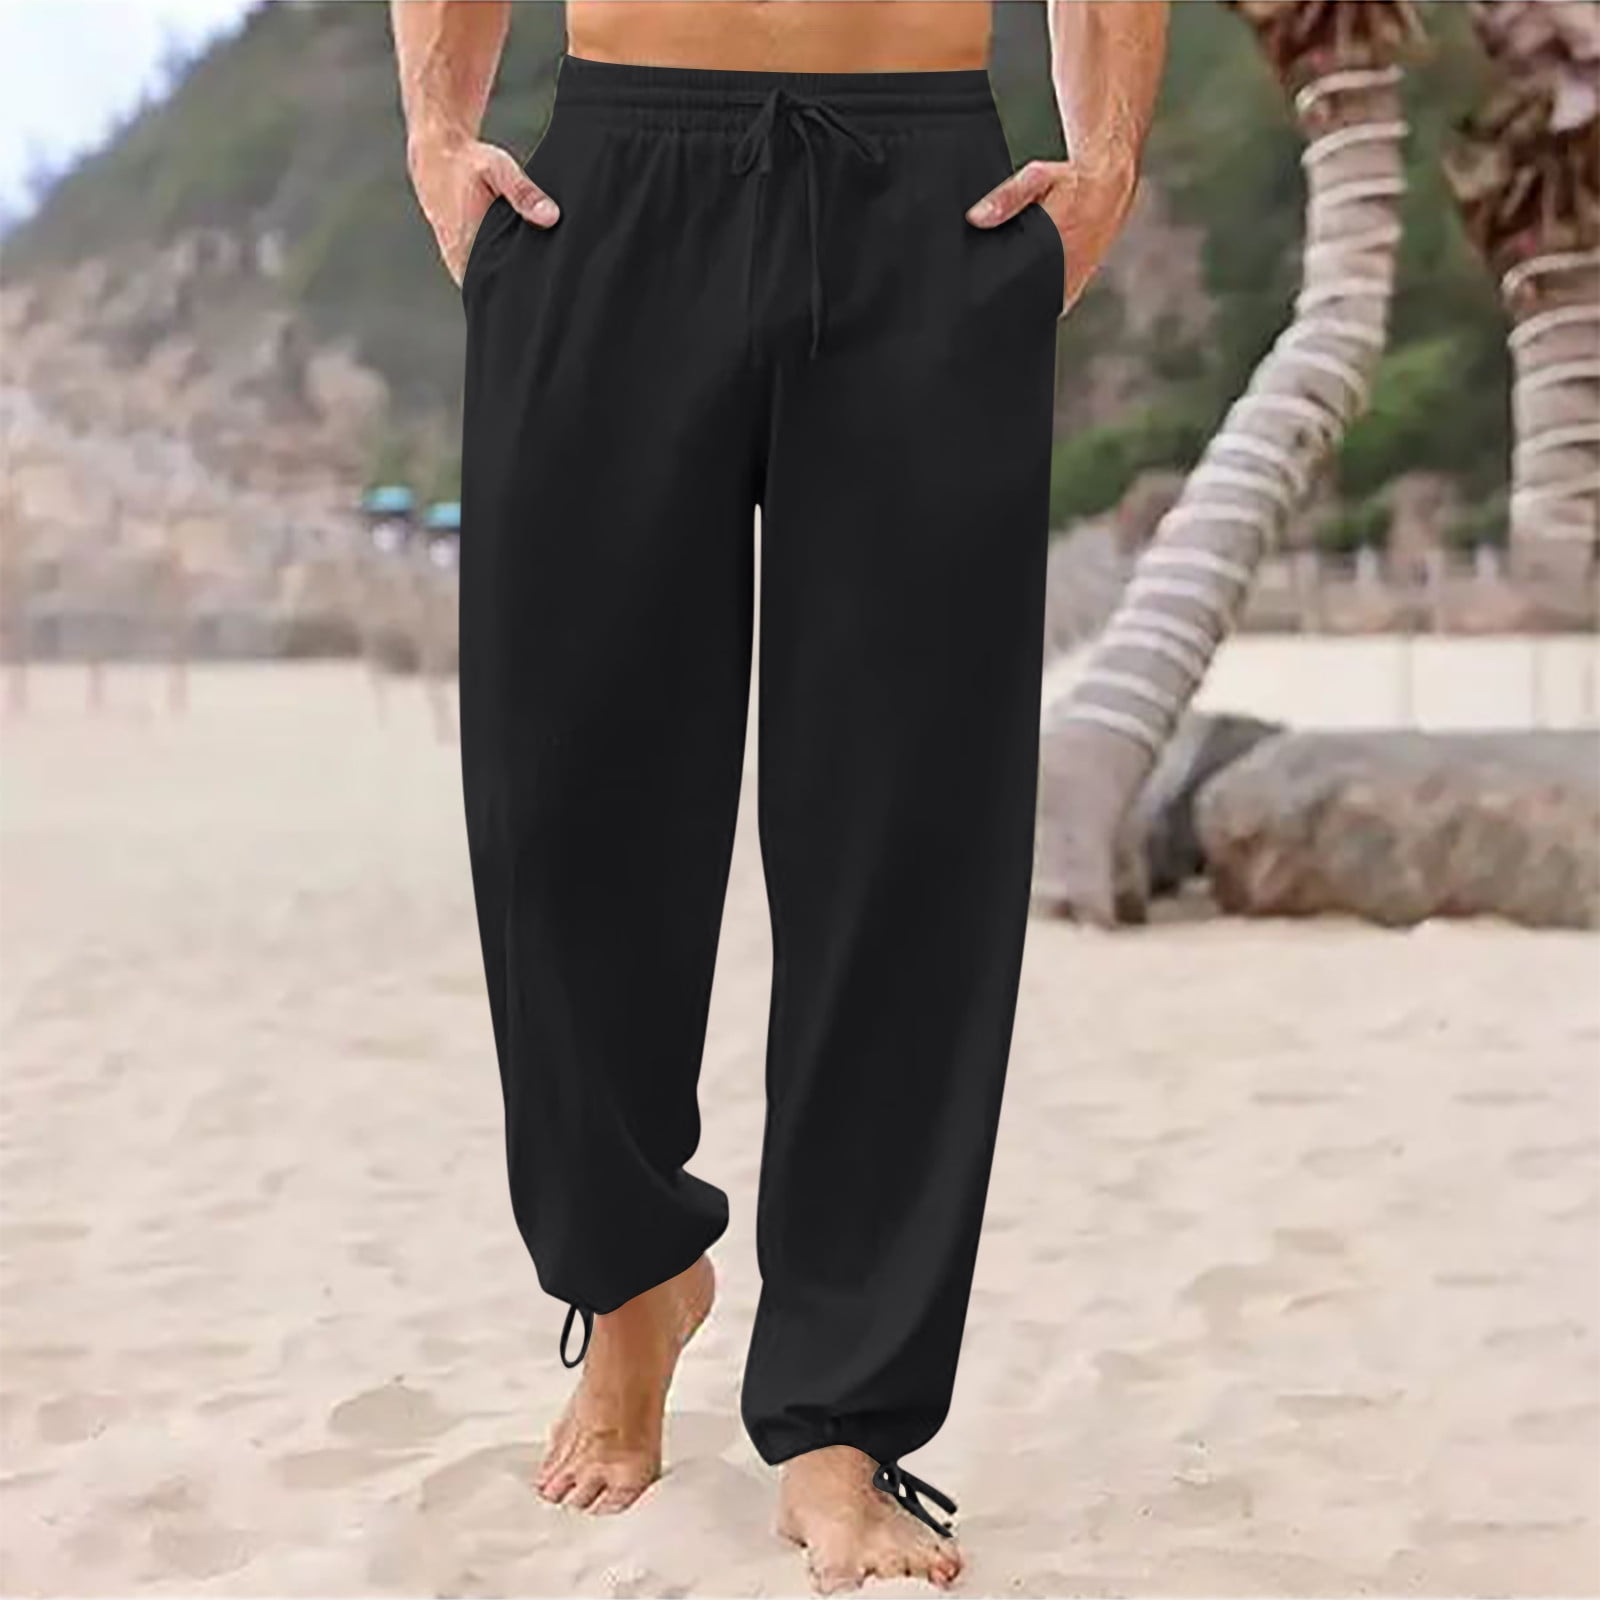 Mens Linen Cargo Pants Lightweight Elastic Waist Drawstring Casual Loose  Summer Beach Yoga Pants with Pockets Army Green XL 